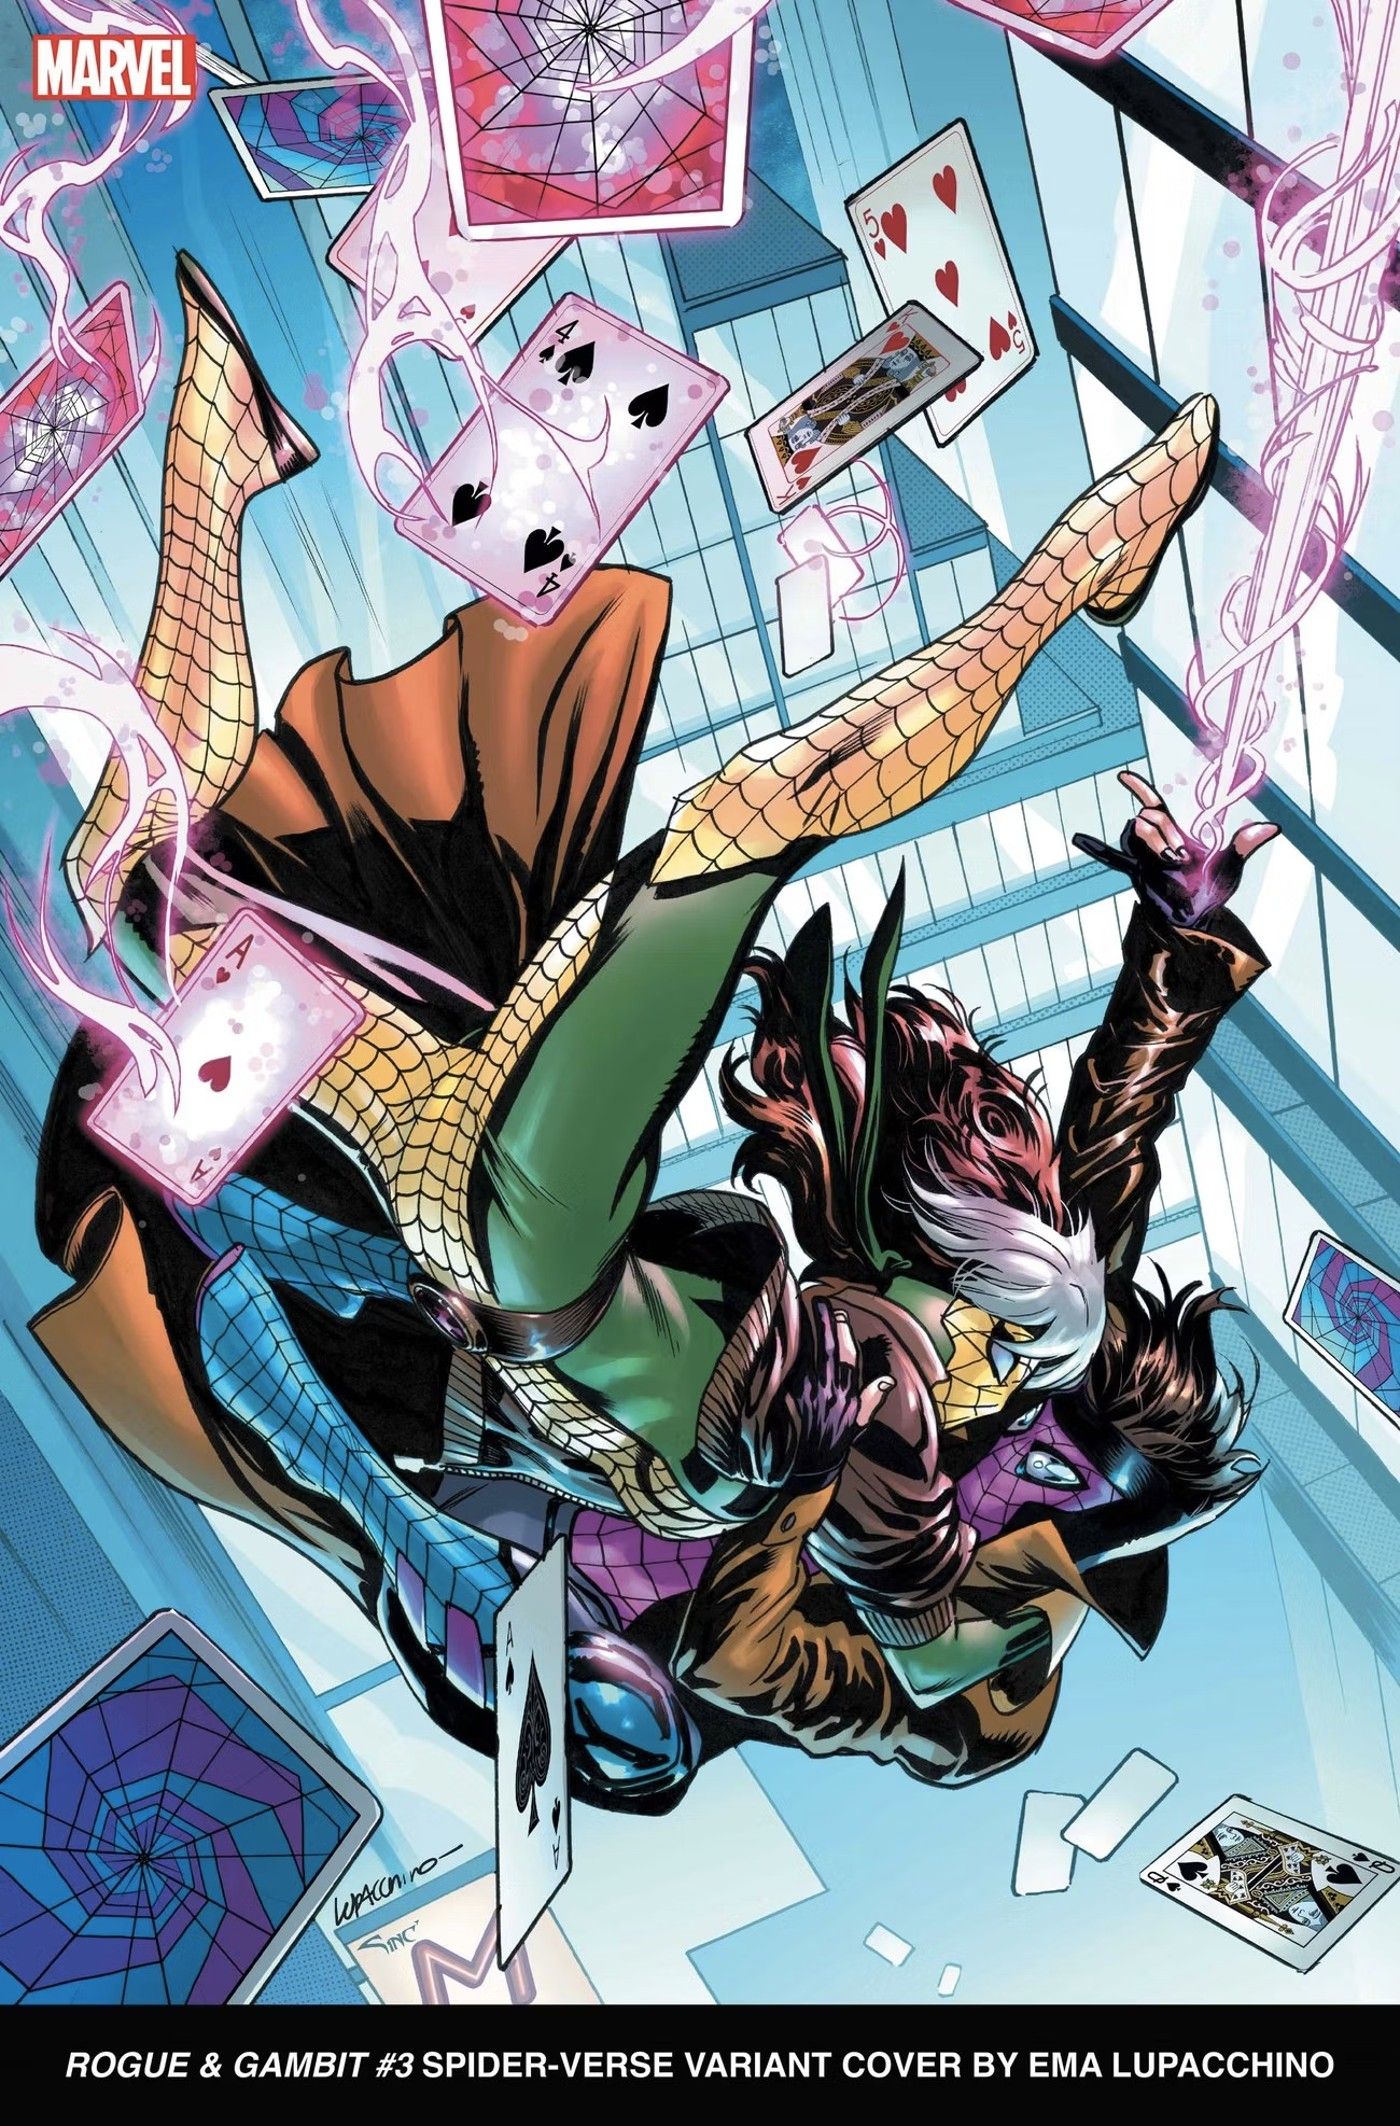 Gambit & Rogue Get Spider-Man Upgrades in New Series Art